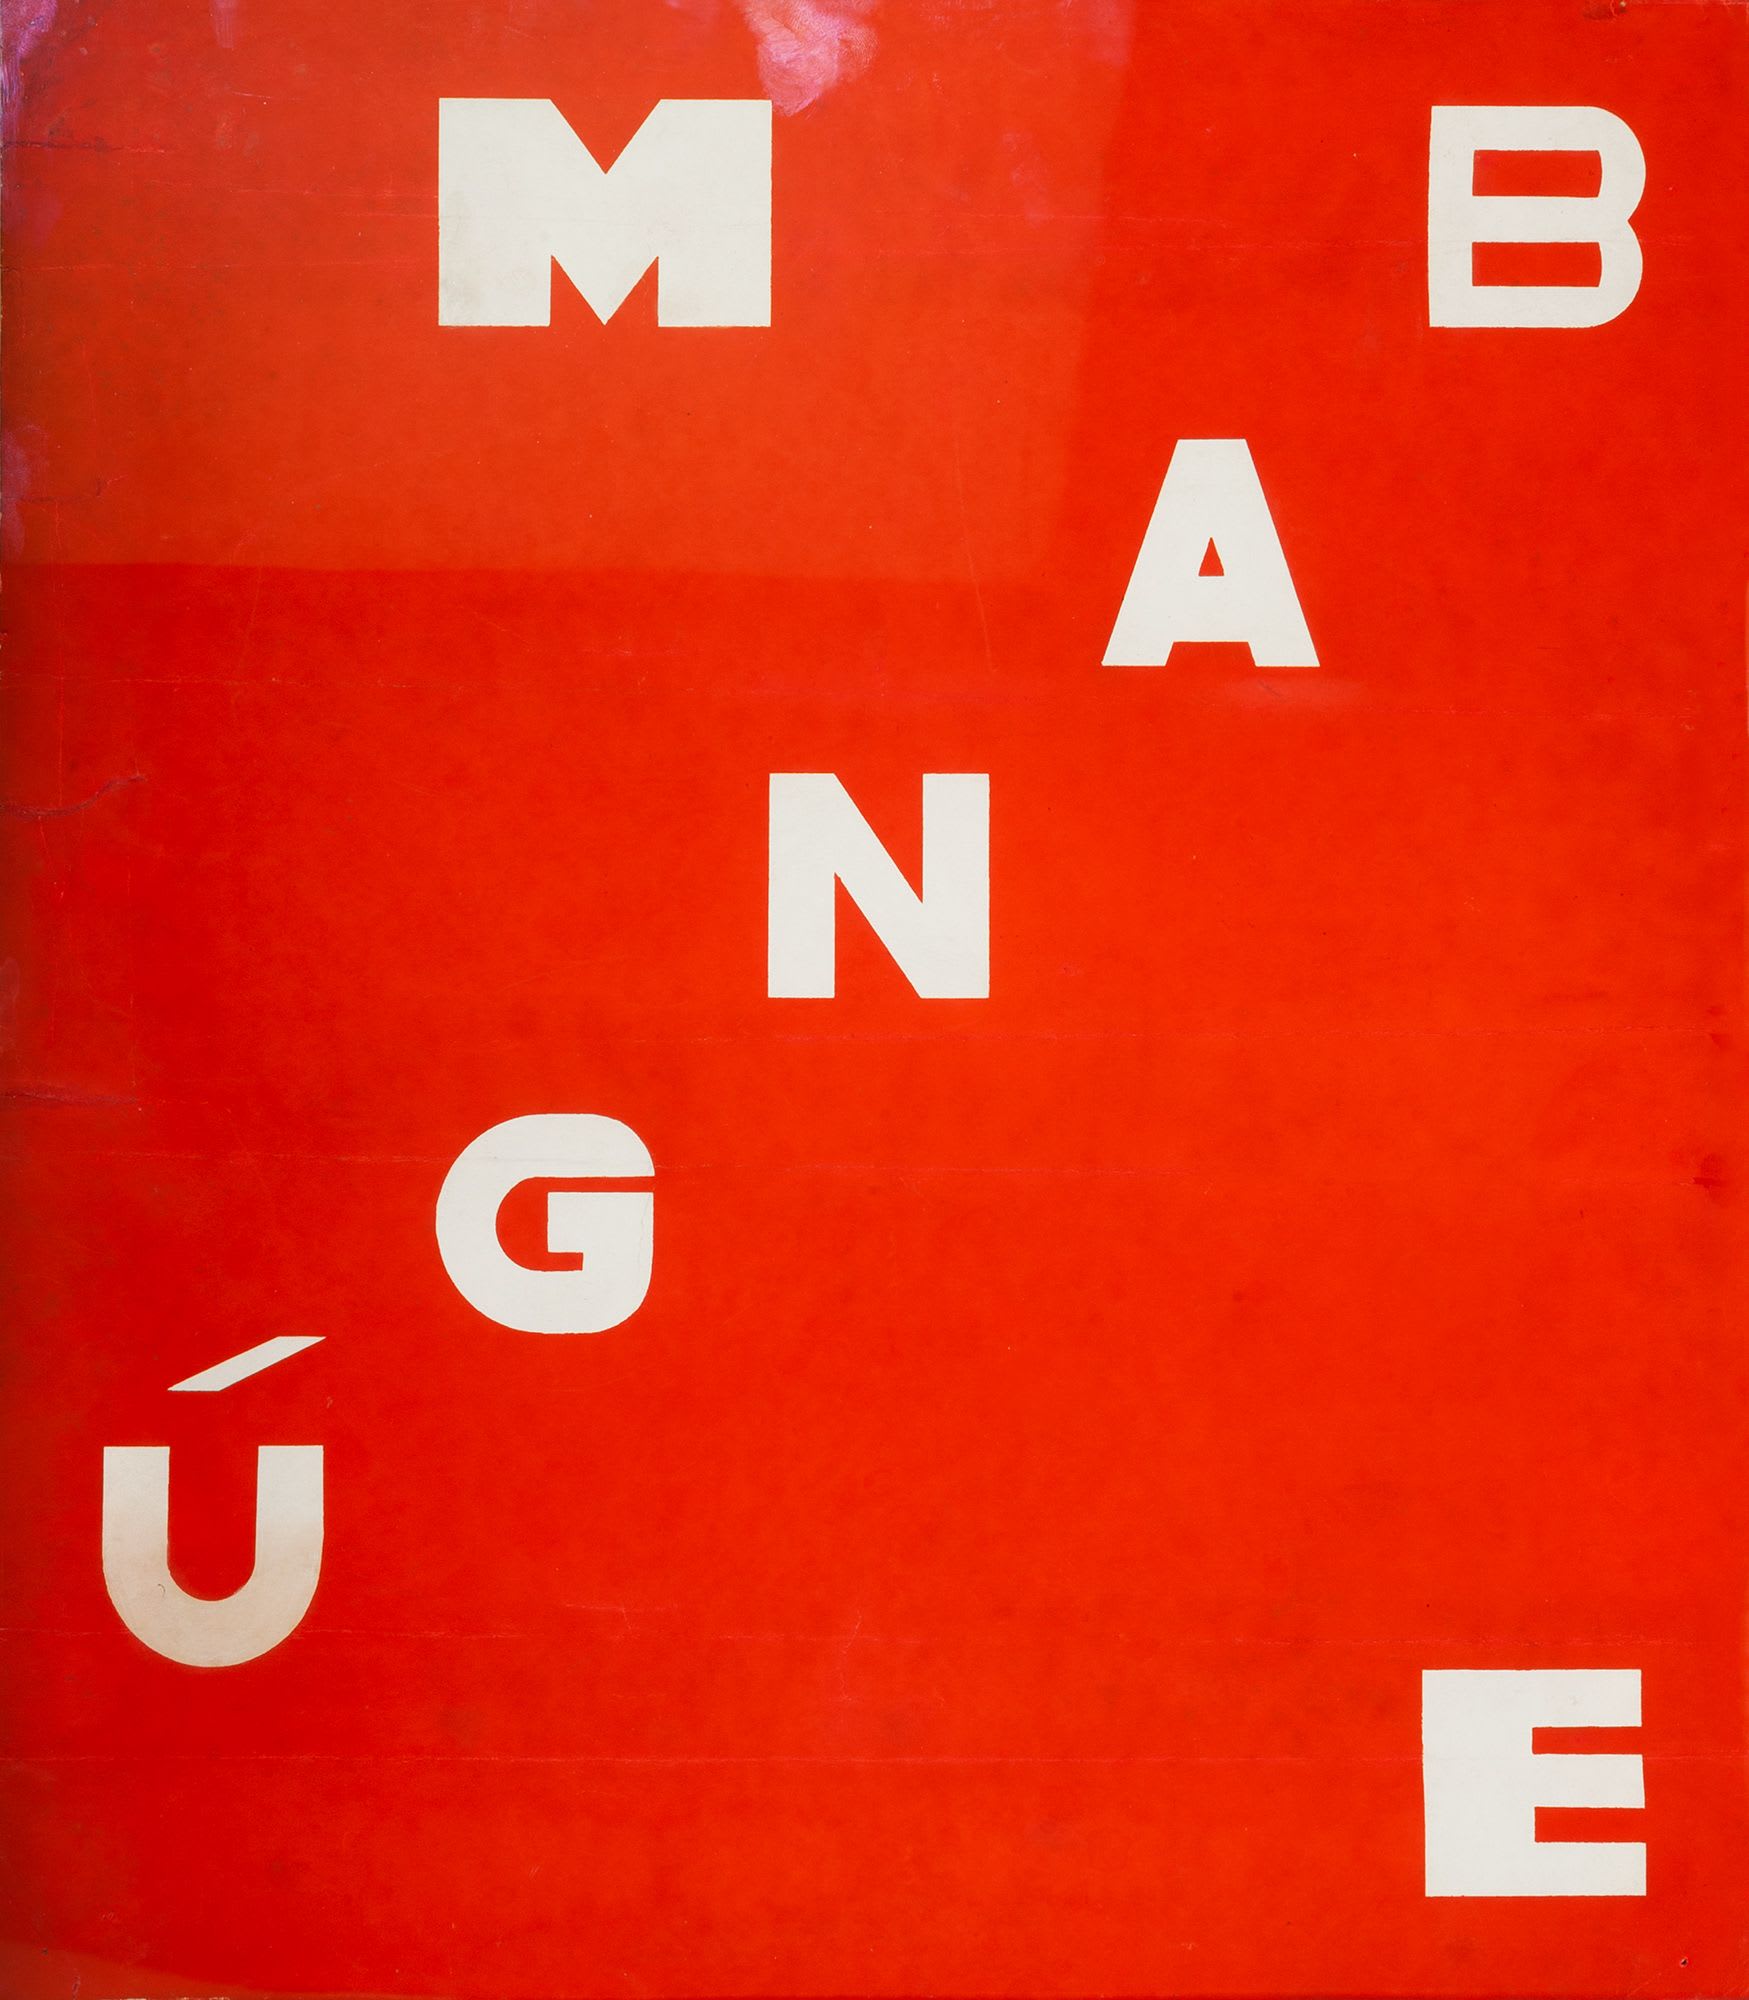 Hélio Oiticica, Bangú Mangue, 1972. Courtesy of Ahrenberg Collection, Switzerland.